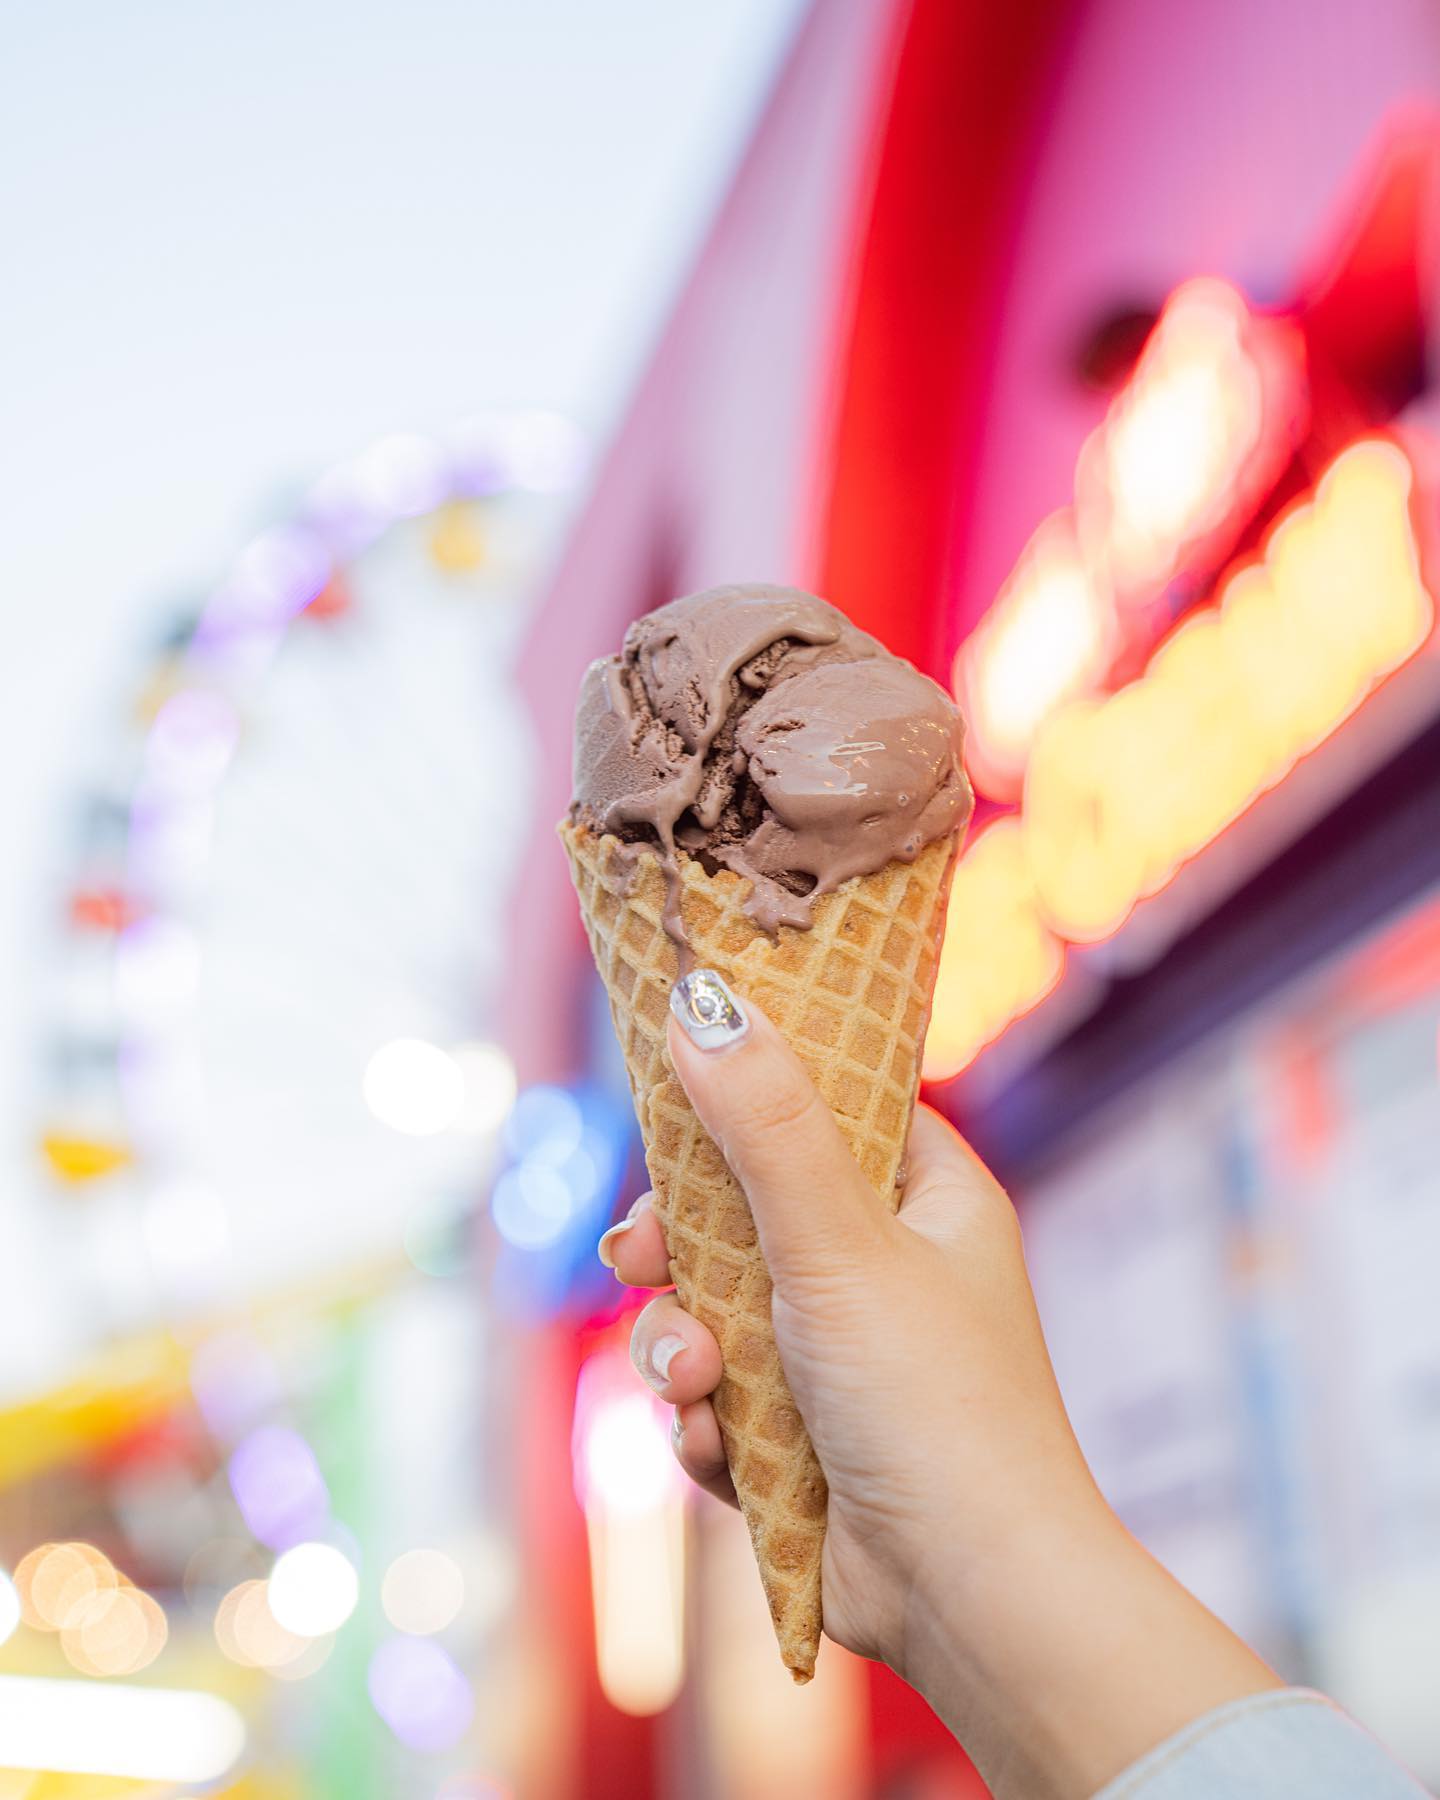 #TastyTuesday: Did you know? 🤔 An average American consumes 48 cups of ice cream throughout the year! 🍦

📸 @ironbabee
.
.
.
#santamonica #santamonicapier #icecream #youscream #weallscreamforicecream #pacpark #pacificpark #tastytreats #lapperts #lappertsicecream #icecream #foodie #dessert #icecreamlover #icecreamaddict #foodie #foodies #foodiesofinstagram @lapperts #chocolate #chocolatelovers #chocolateicecream #foodforthought